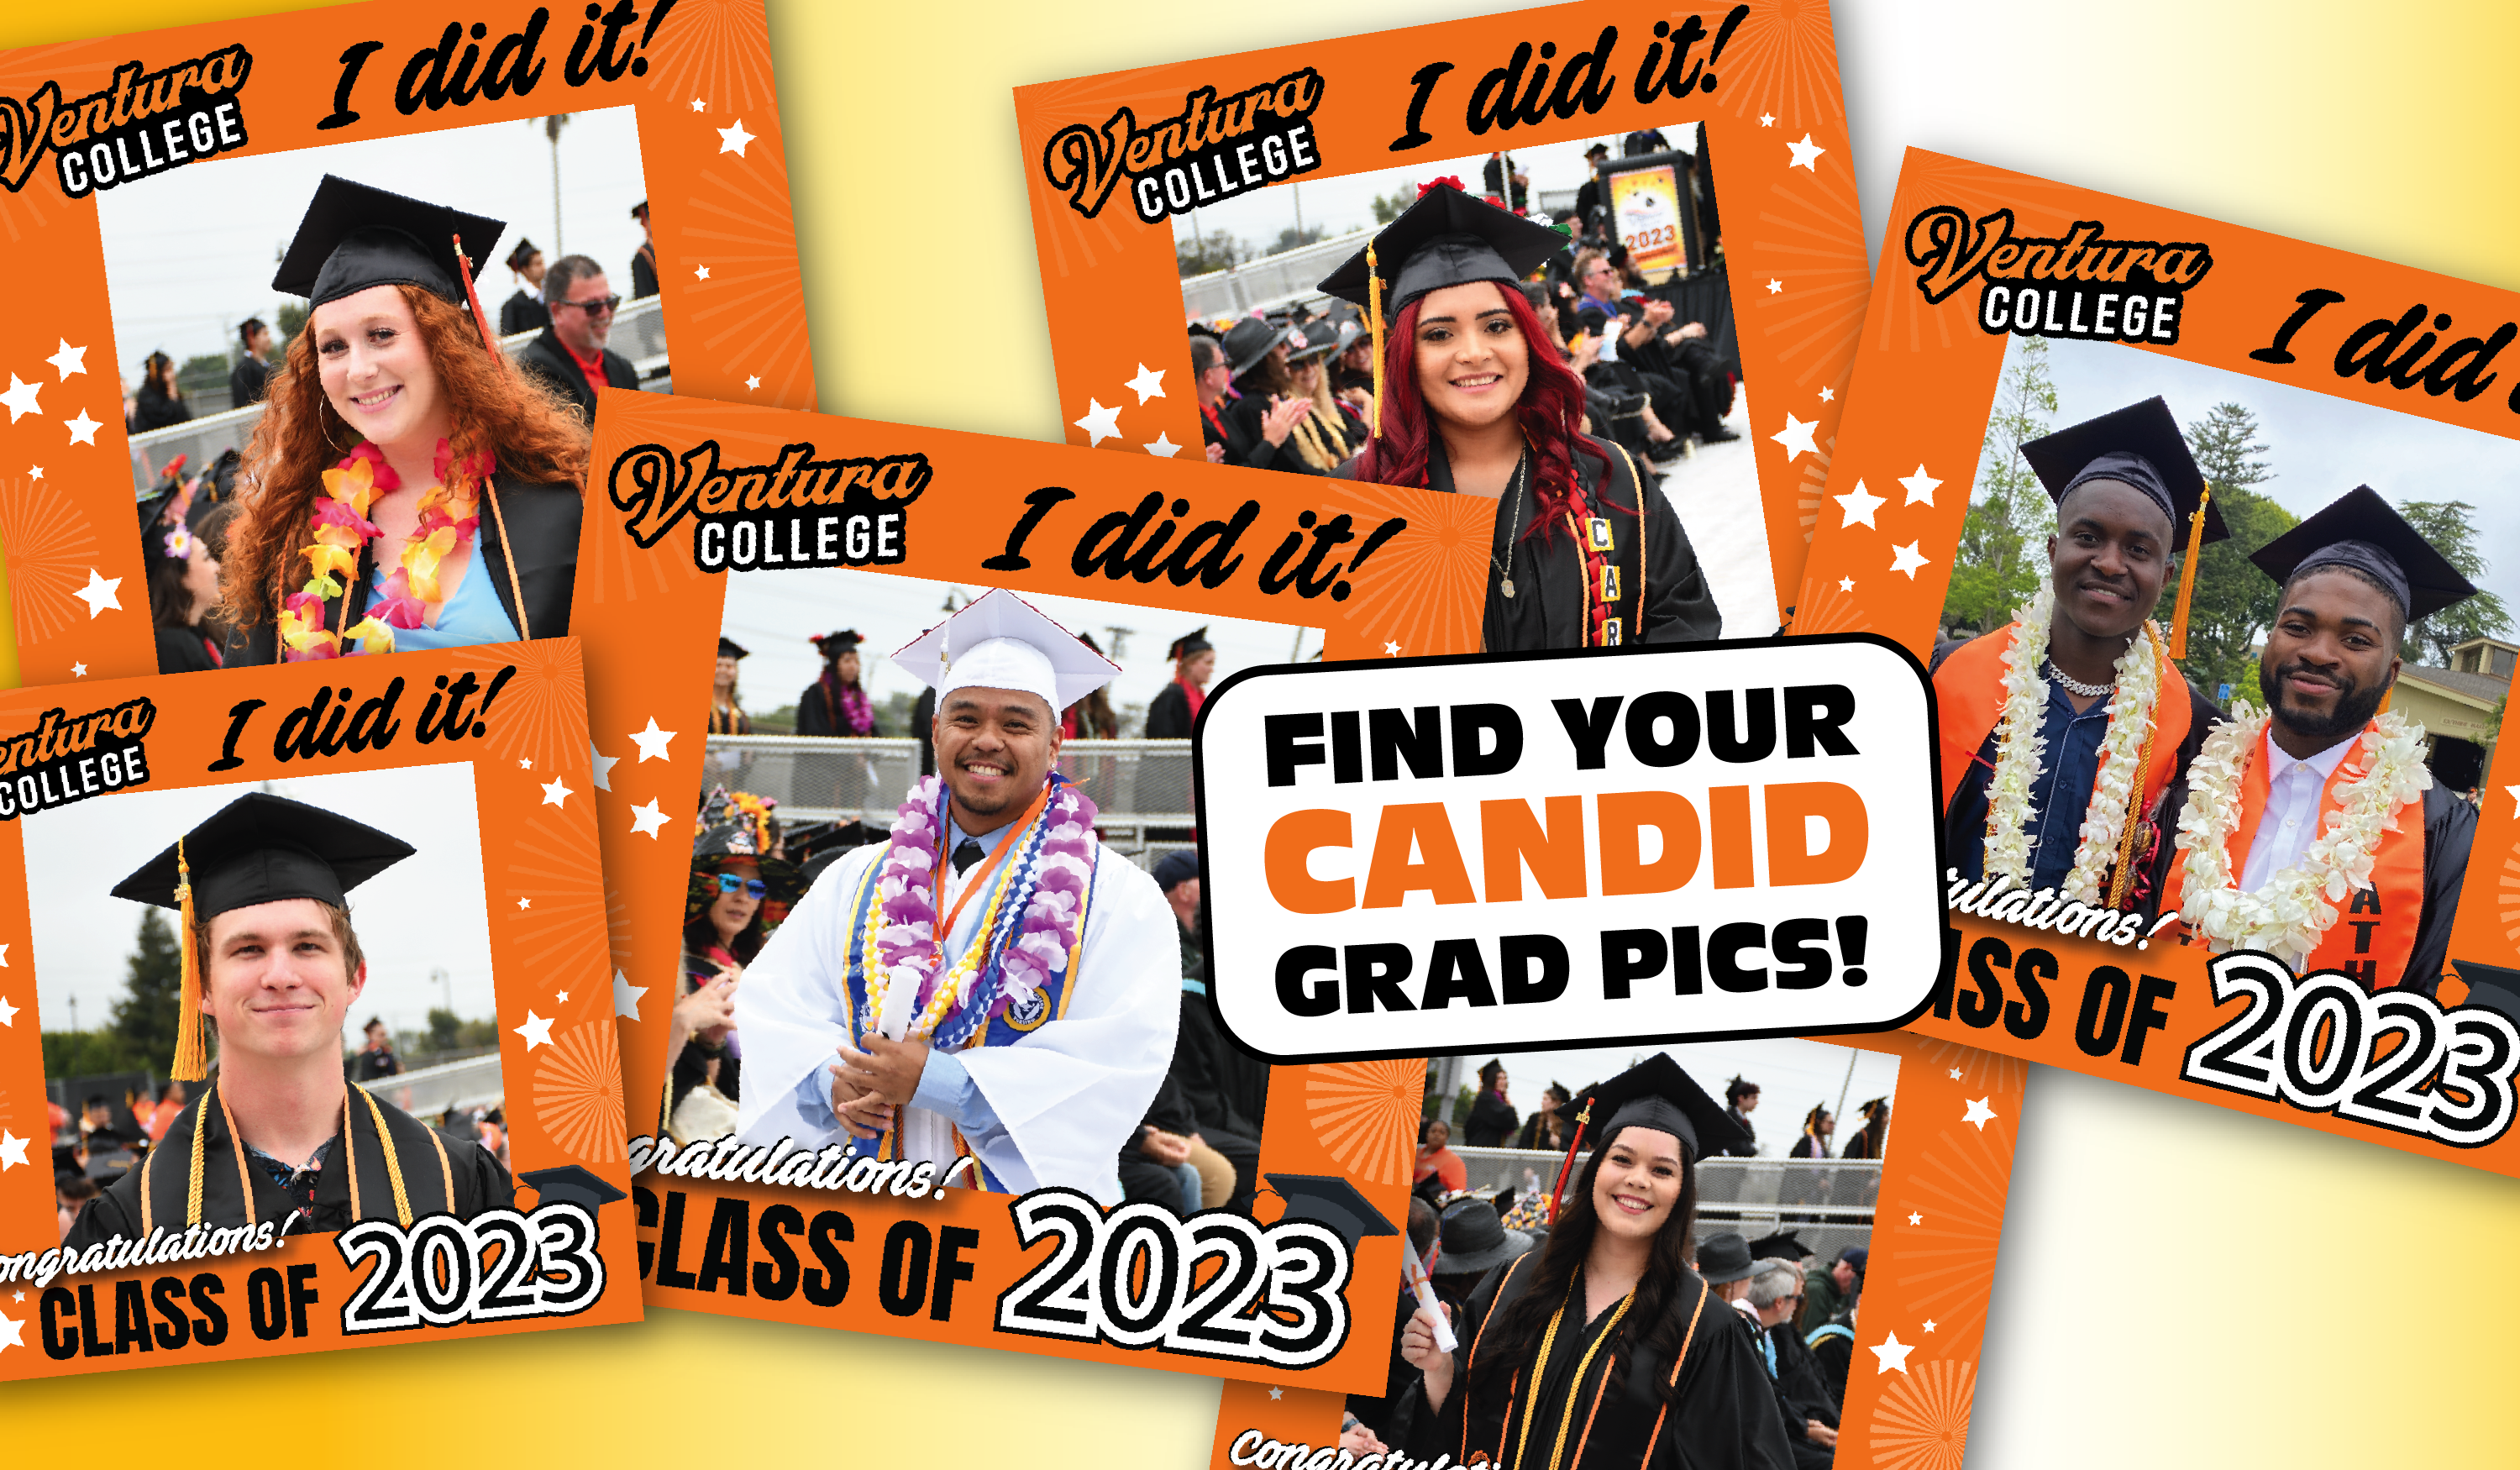 Find Your Candid Grad Pics!